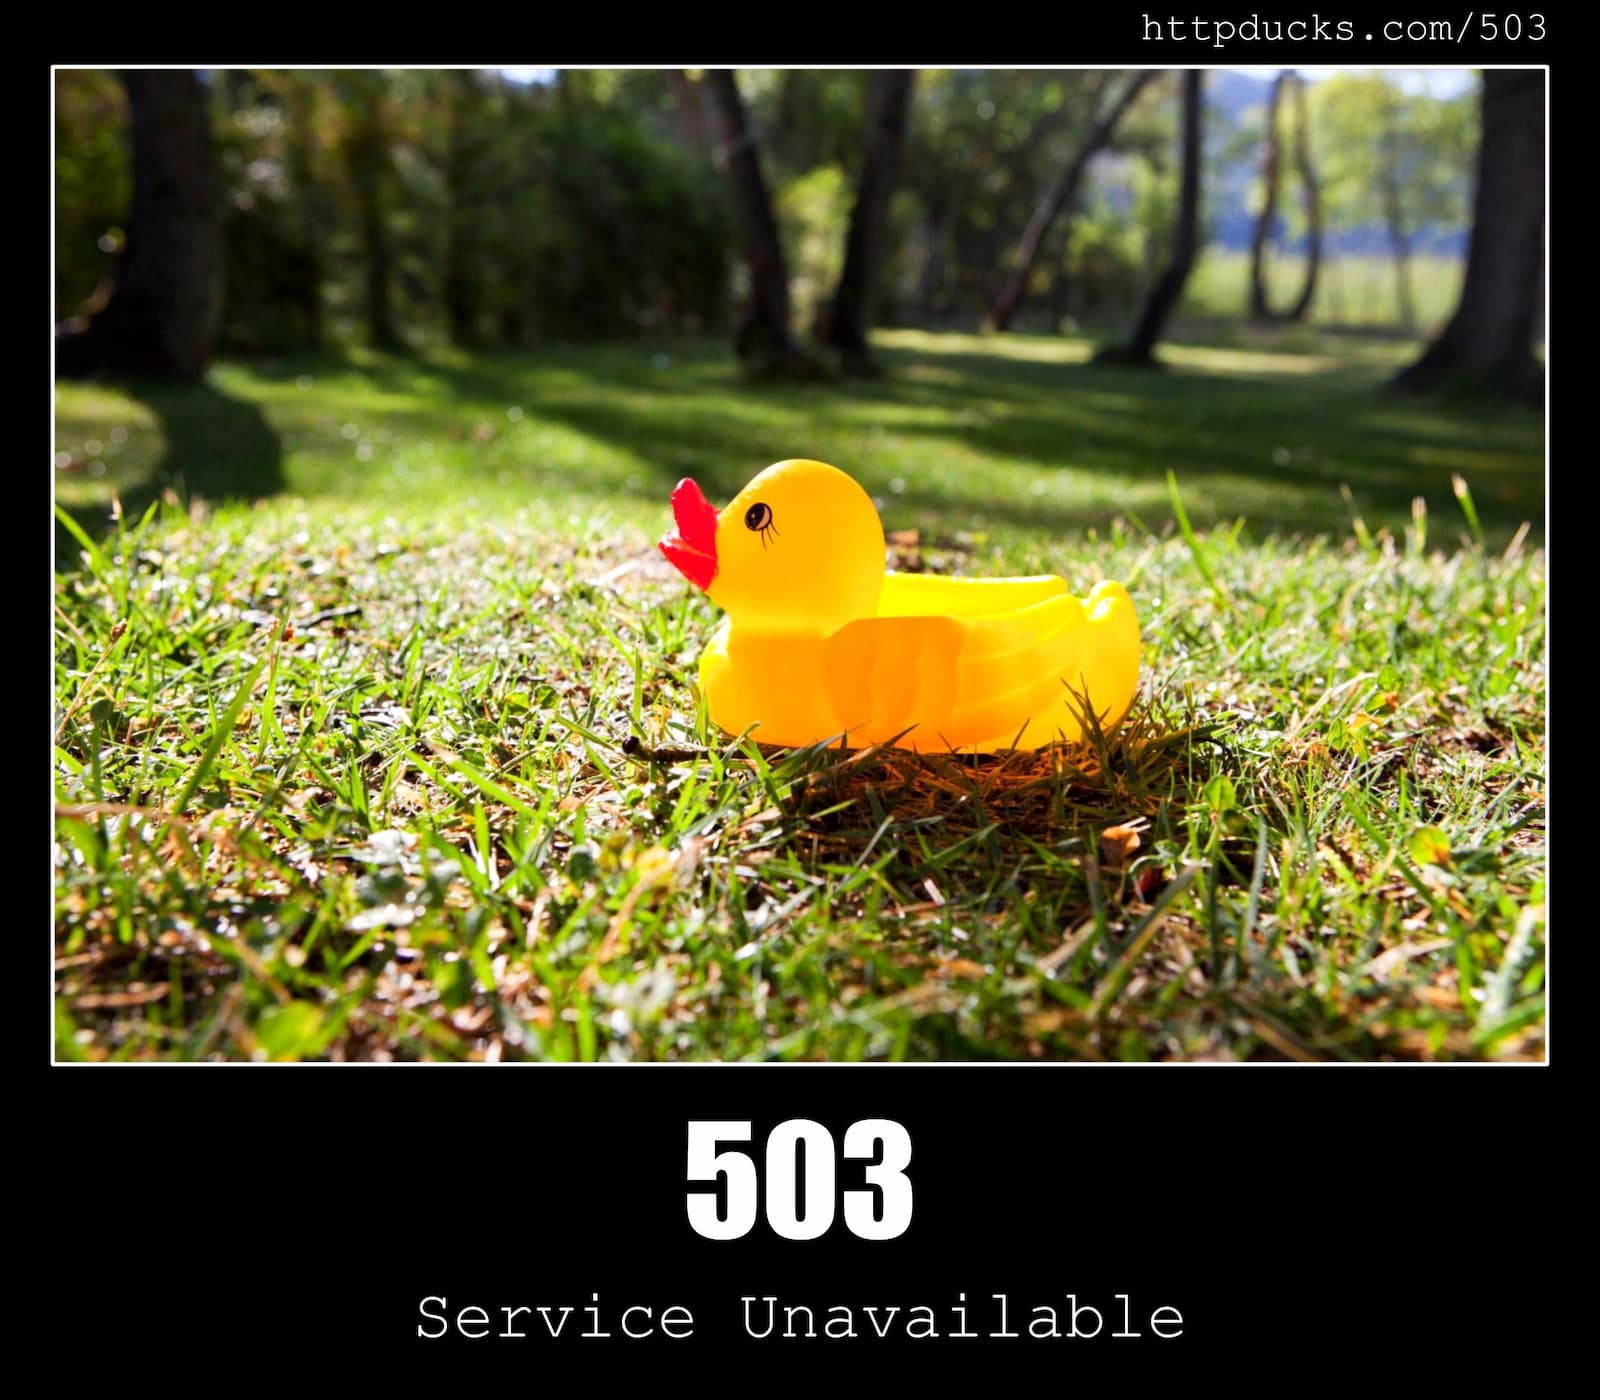 HTTP Status Code 503 Service Unavailable & Ducks